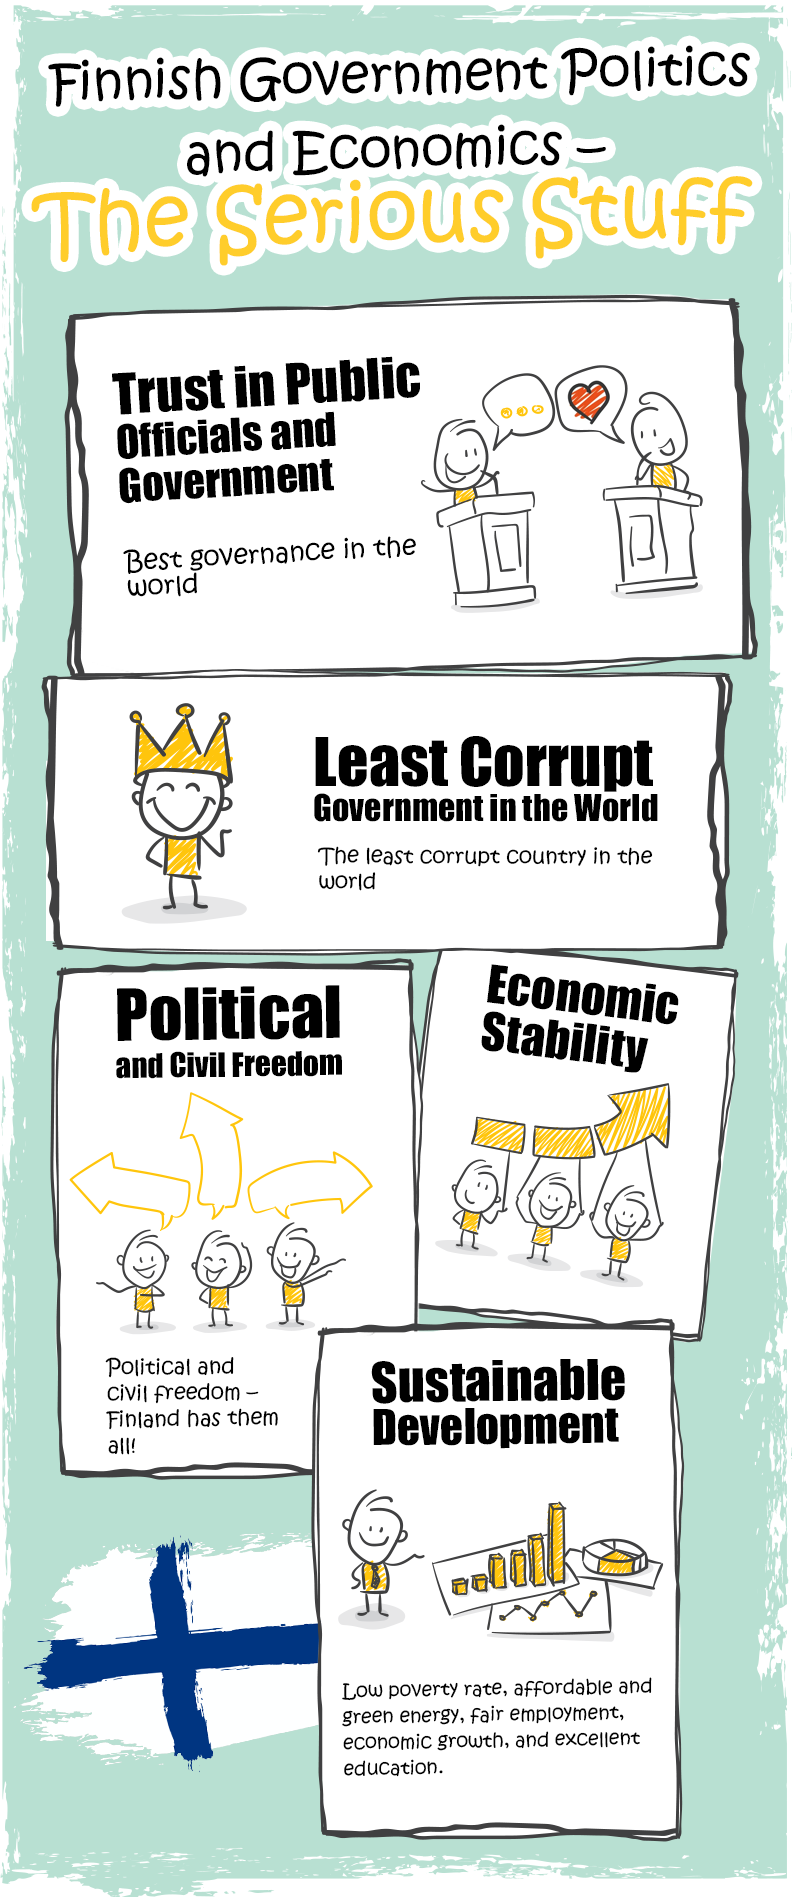 Finnish Government Politics and Economics